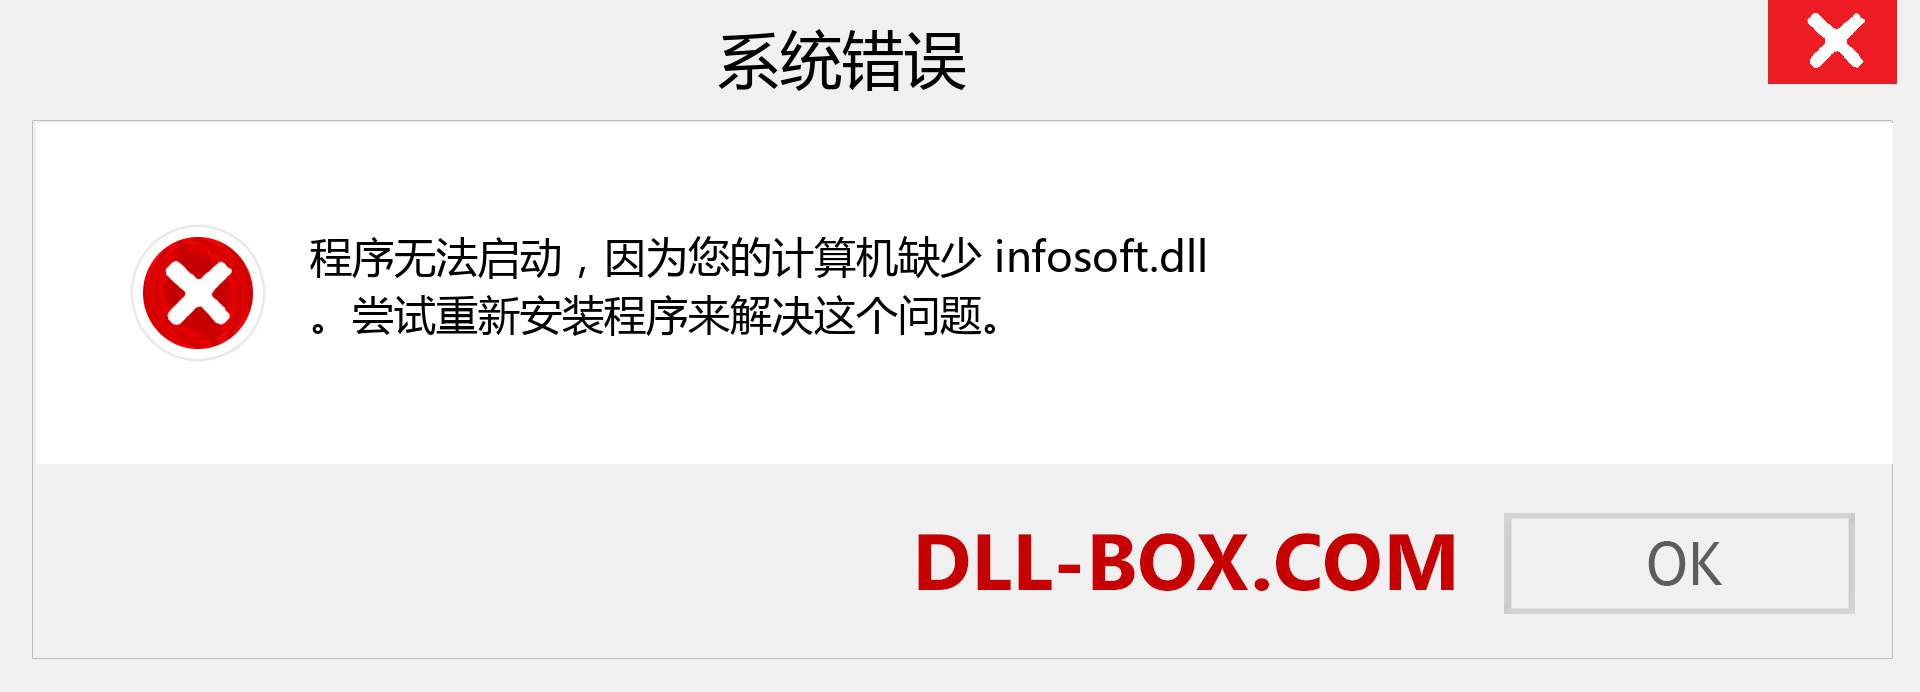 infosoft.dll 文件丢失？。 适用于 Windows 7、8、10 的下载 - 修复 Windows、照片、图像上的 infosoft dll 丢失错误